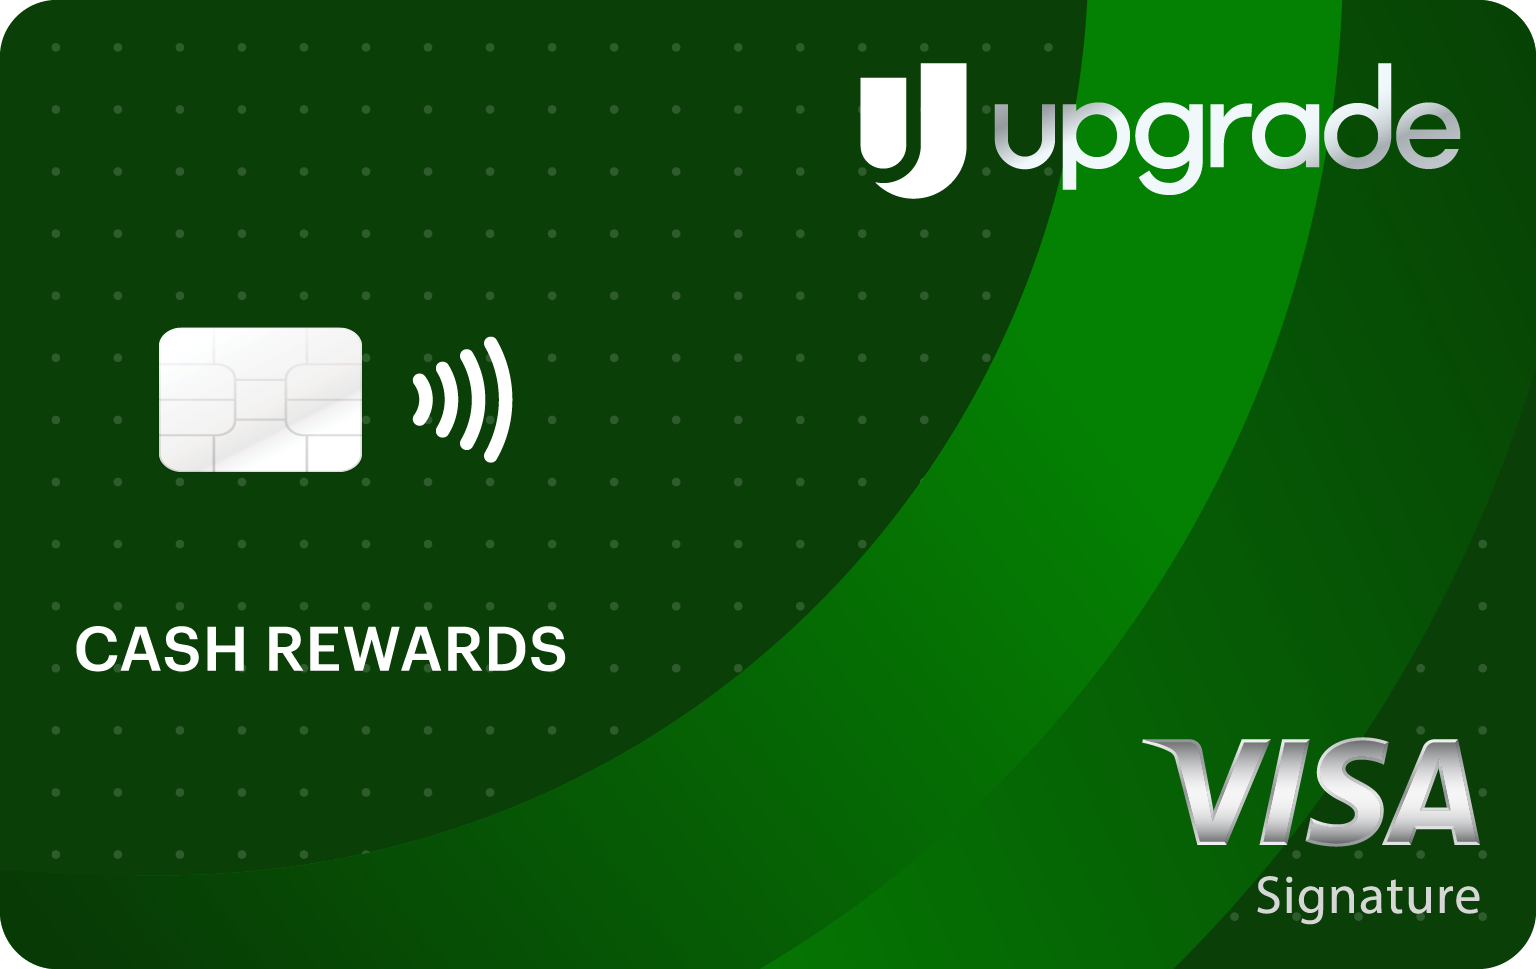 Upgrade Visa® Card with Cash Rewards